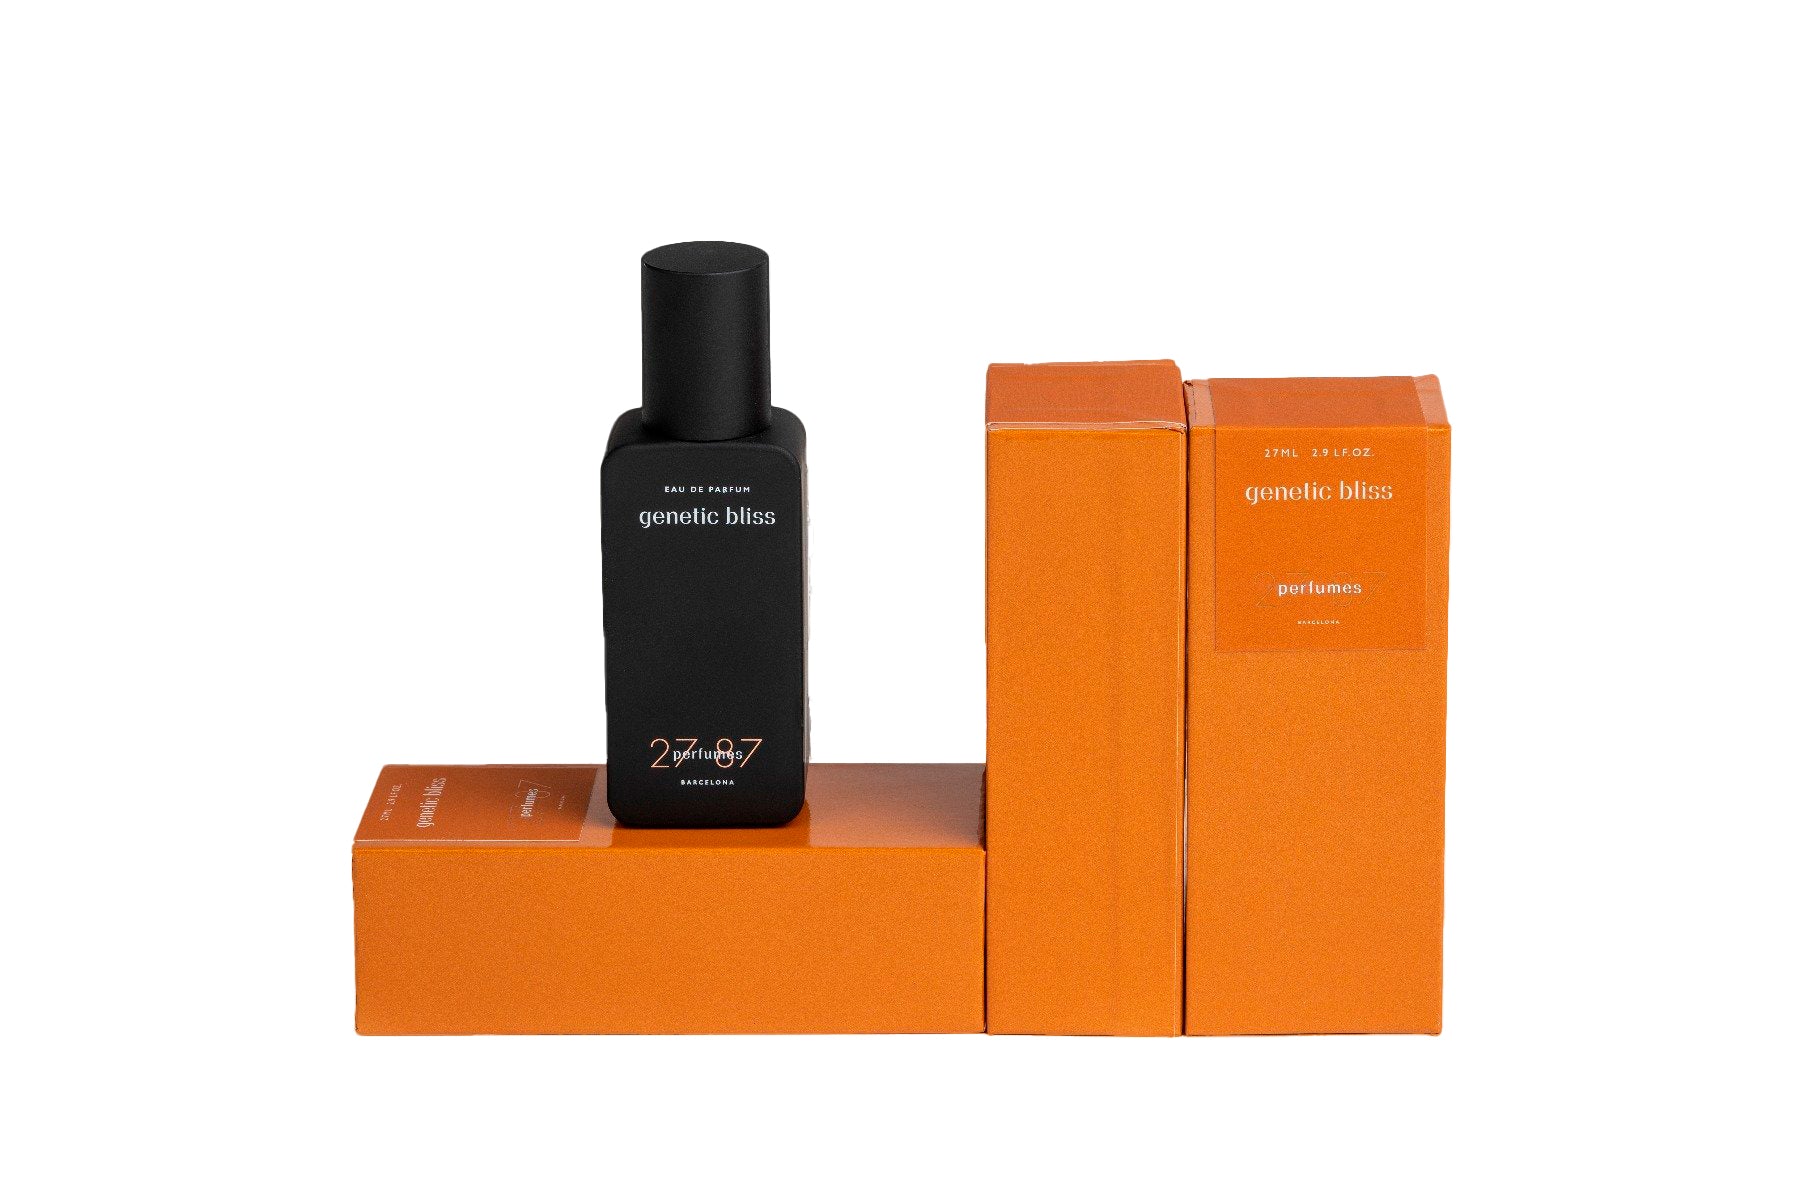 2787 Perfumes – Genetic bliss duft – 27 ml.